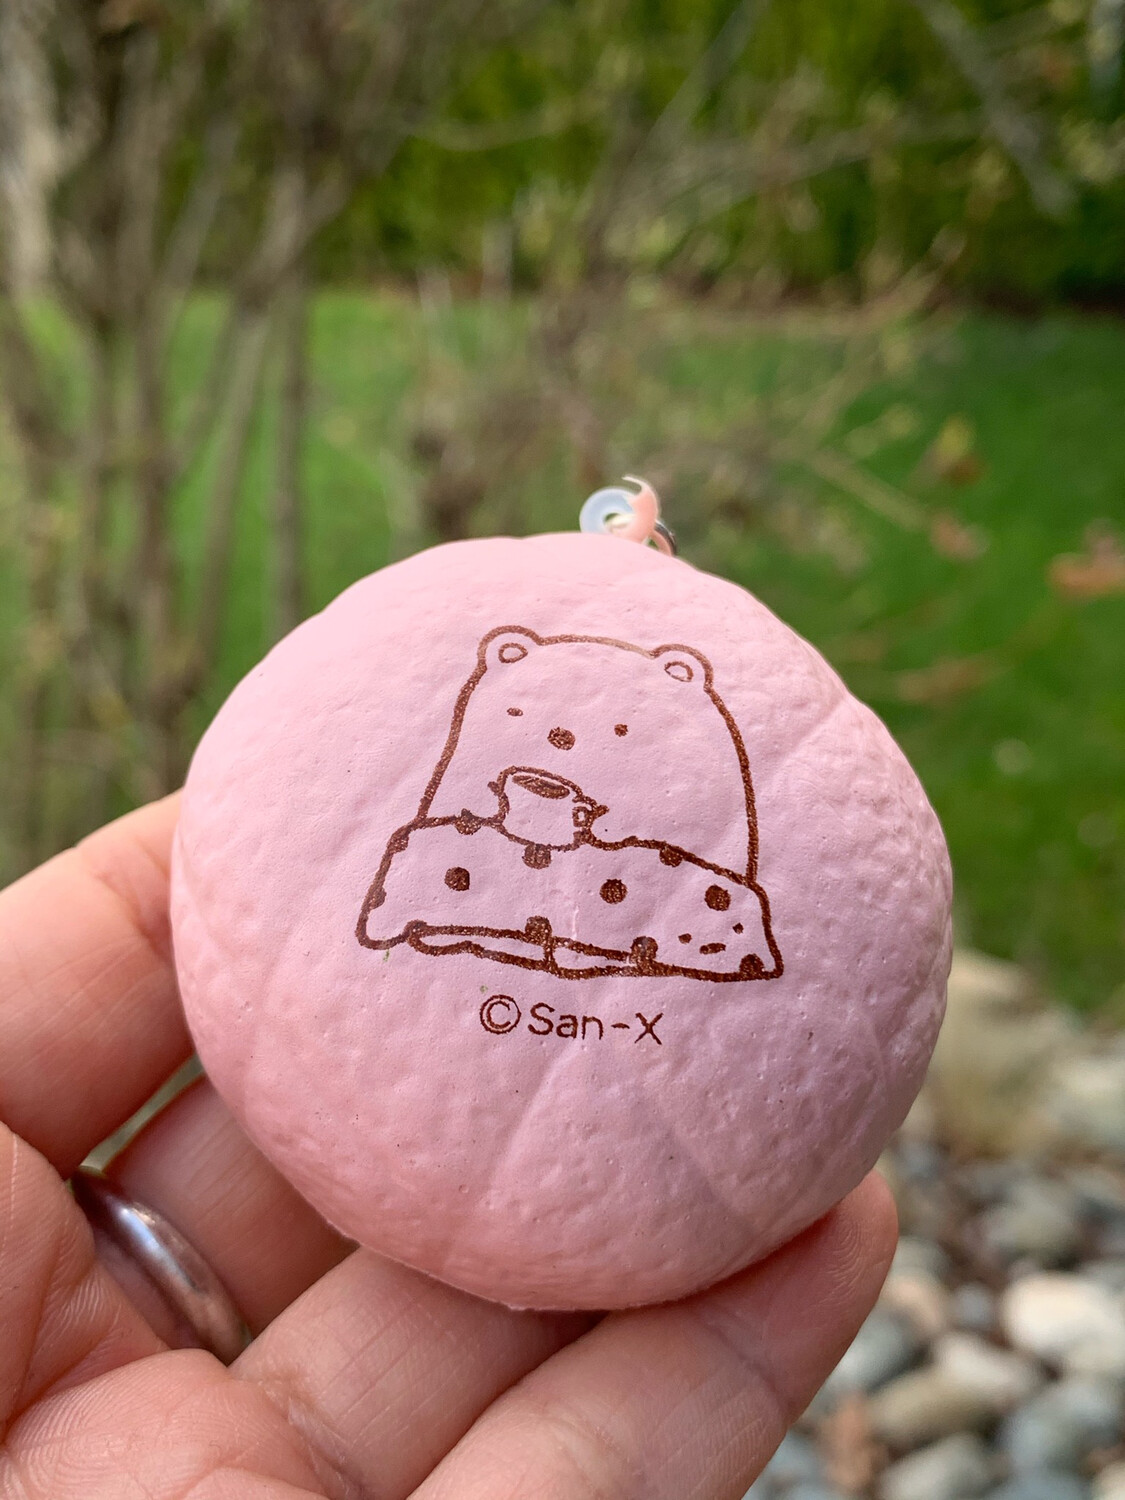 San-X Sumikko Gurashi Sweet Bun Squishy Toy